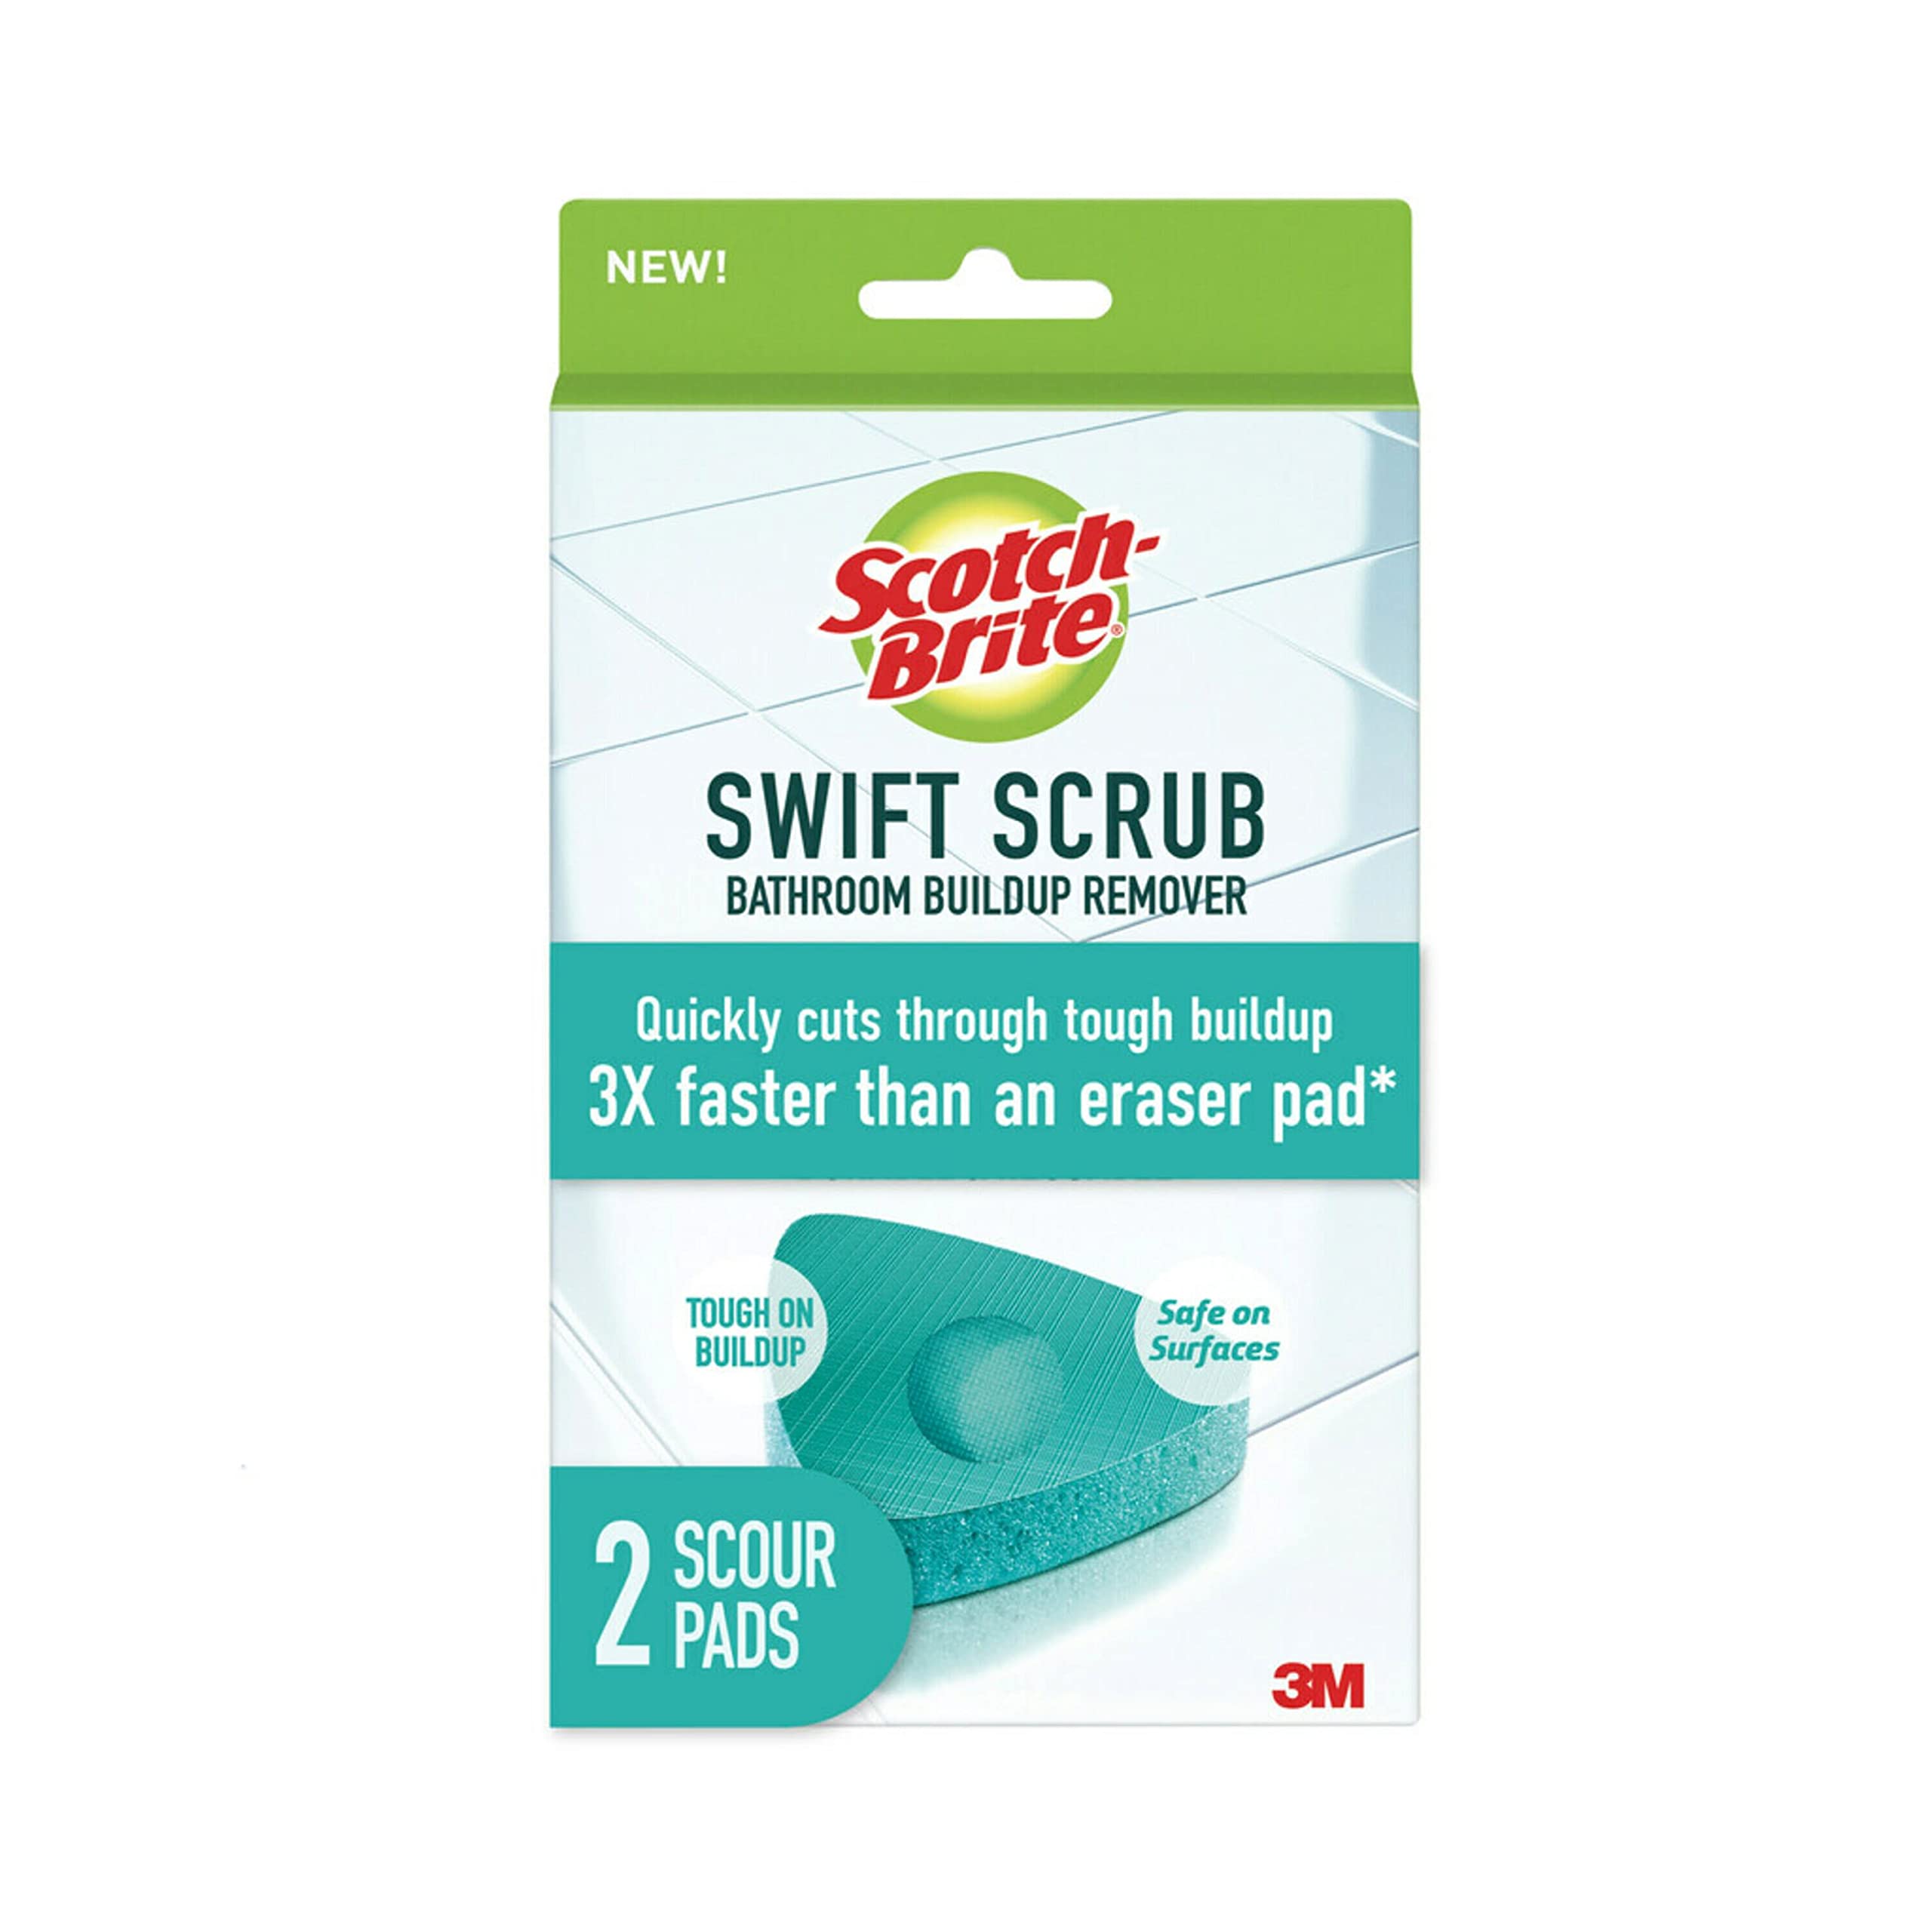 Scotch-Brite Swift Scrub, Bathroom Buildup, Glass Door, Shower and Bath Cleaner, Soap Scum Remover, 3X Faster Than an Eraser Pad, 2 Count